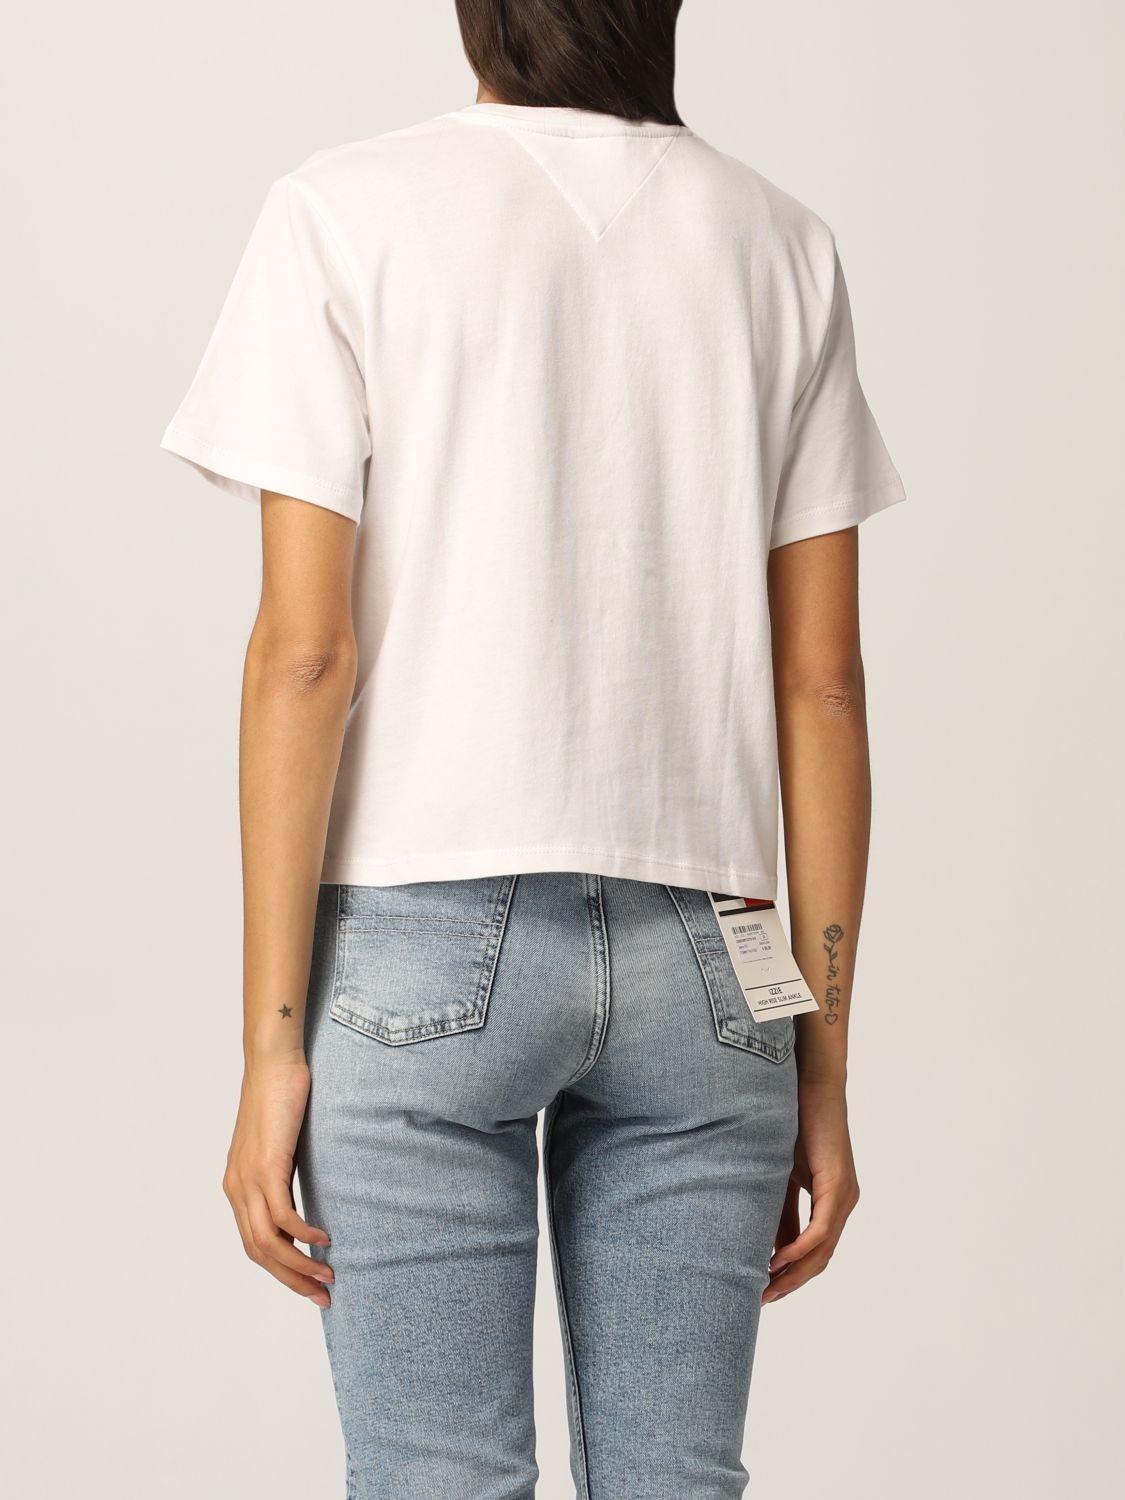 TOMMY HILFIGER: T-shirt women | T-Shirt Tommy Hilfiger Women White | T ...